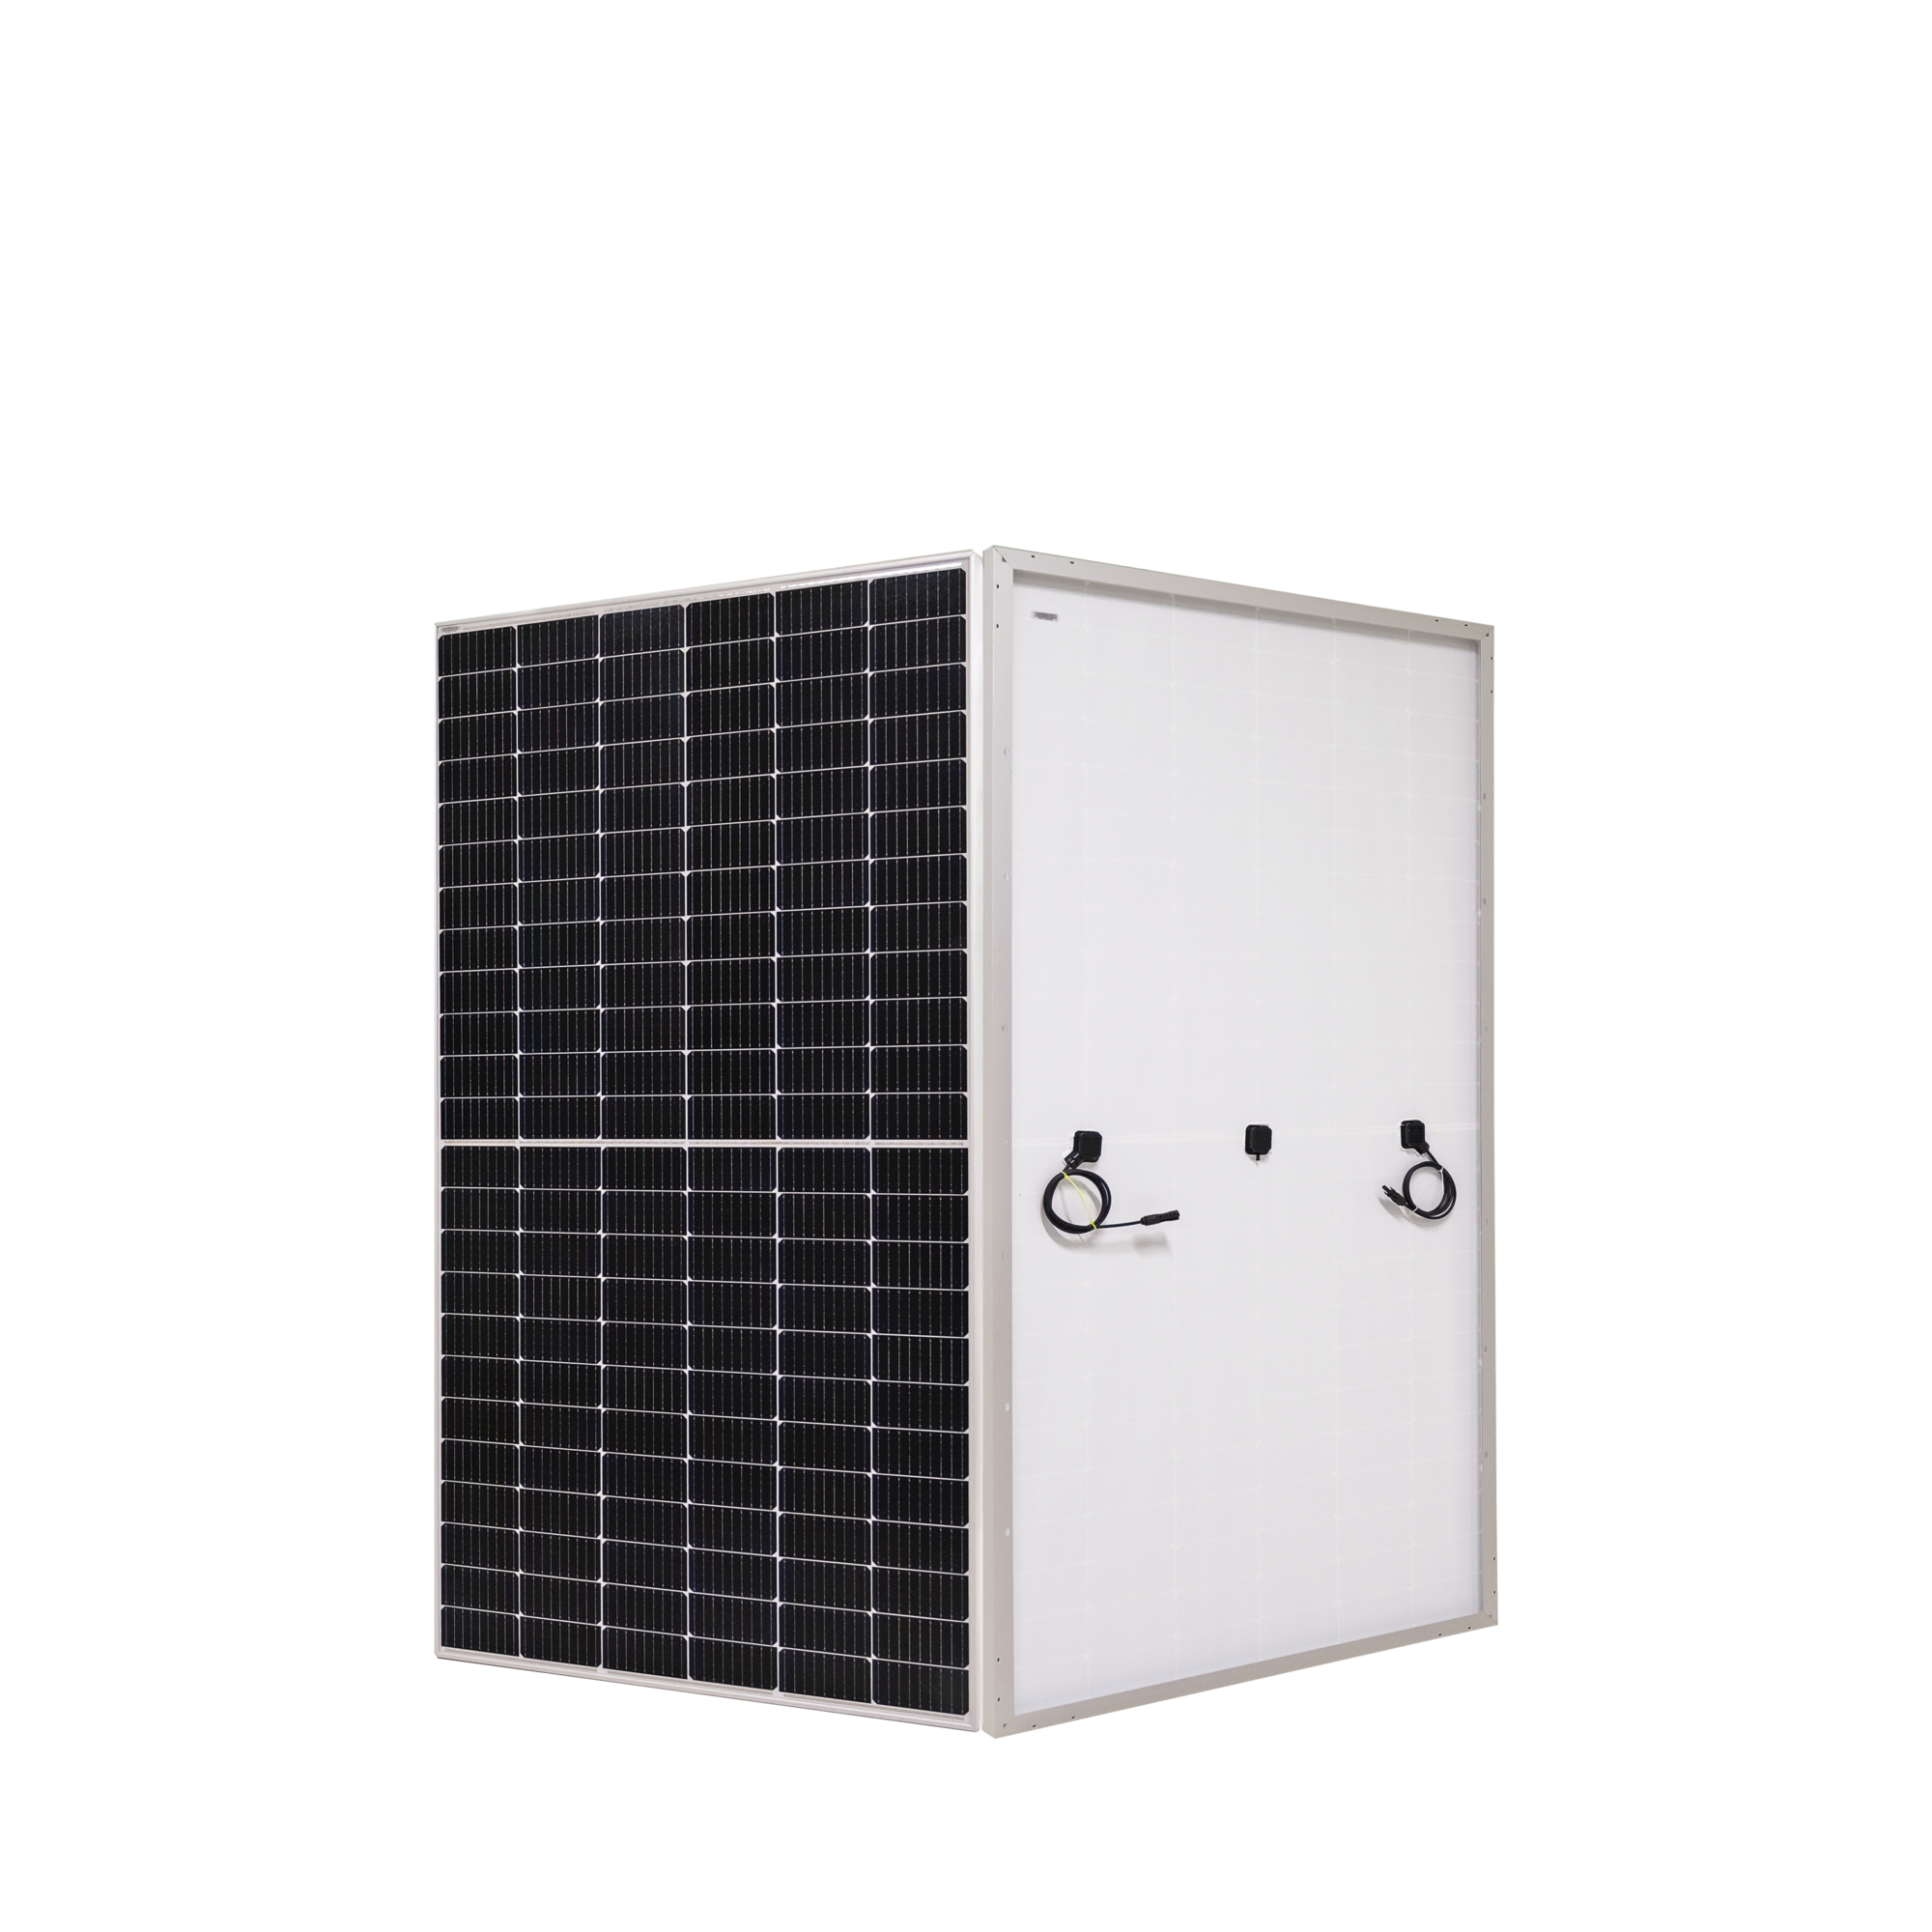 ARCLK-144HC-455W Solar Panel Solar Panel